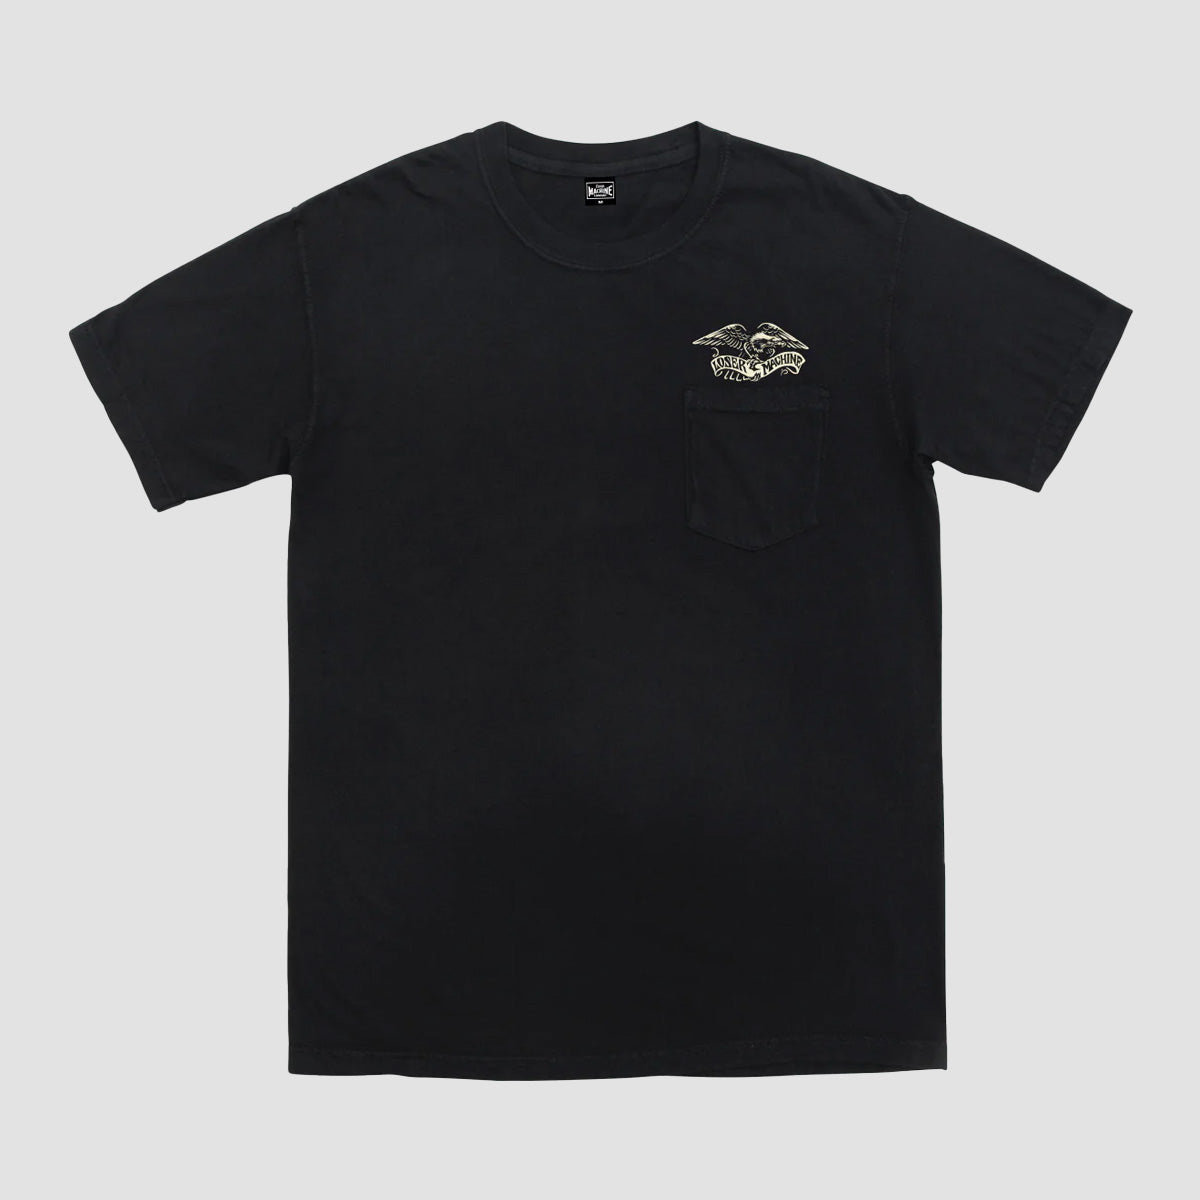 Loser Machine Liberty Pocket T-Shirt Black